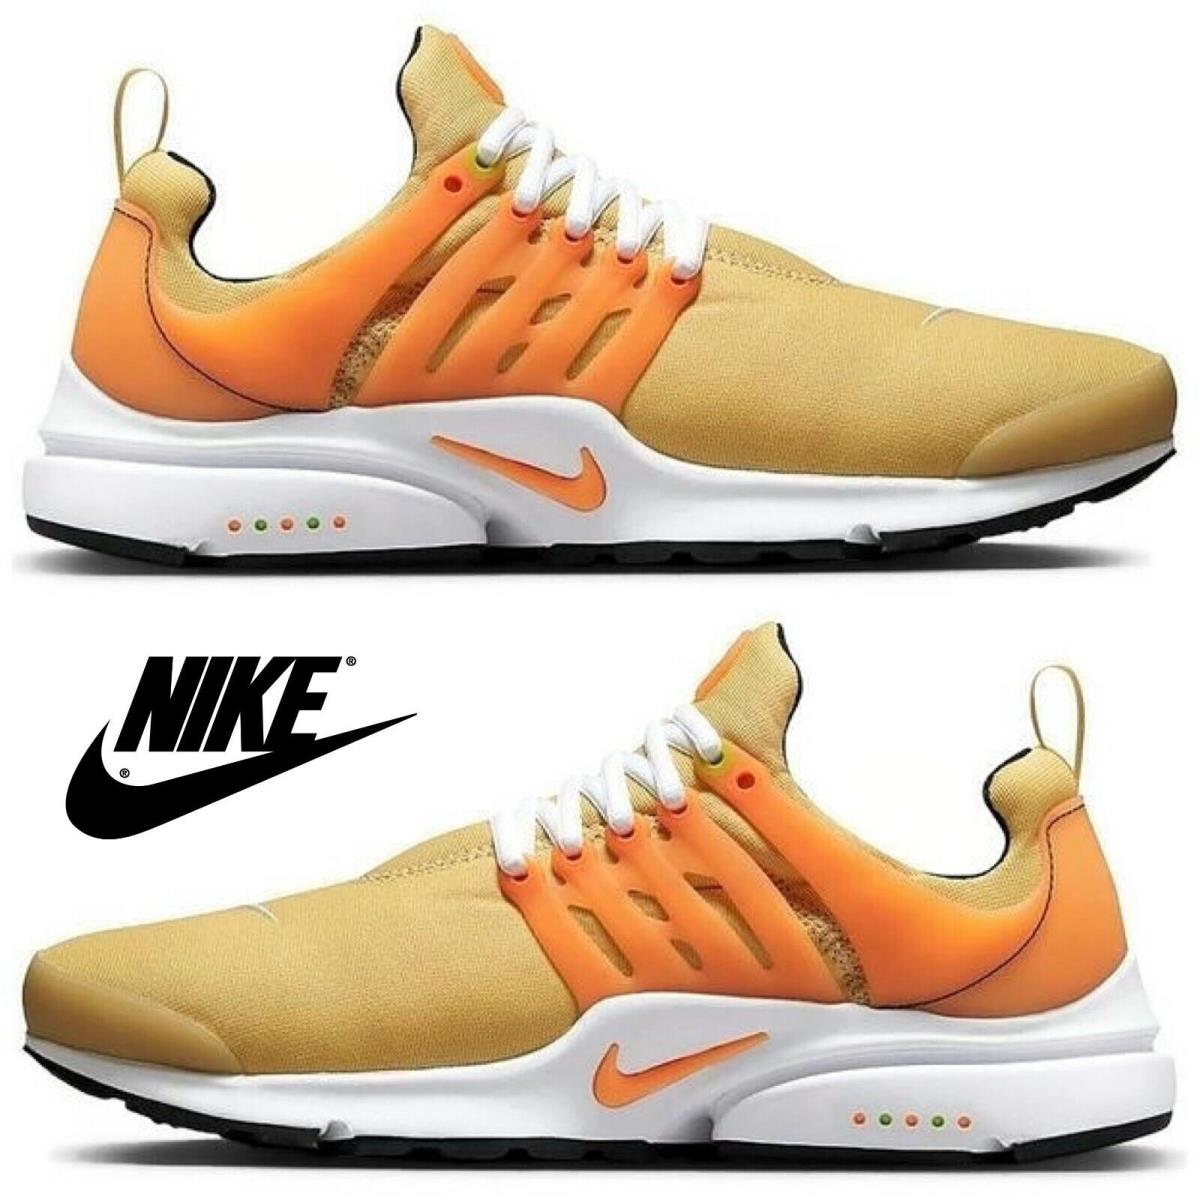 Nike Air Presto Running Sneakers Mens Athletic Comfort Casual Shoes Orange White - Orange , Sesame/White/Black/Bright Mandarin Manufacturer